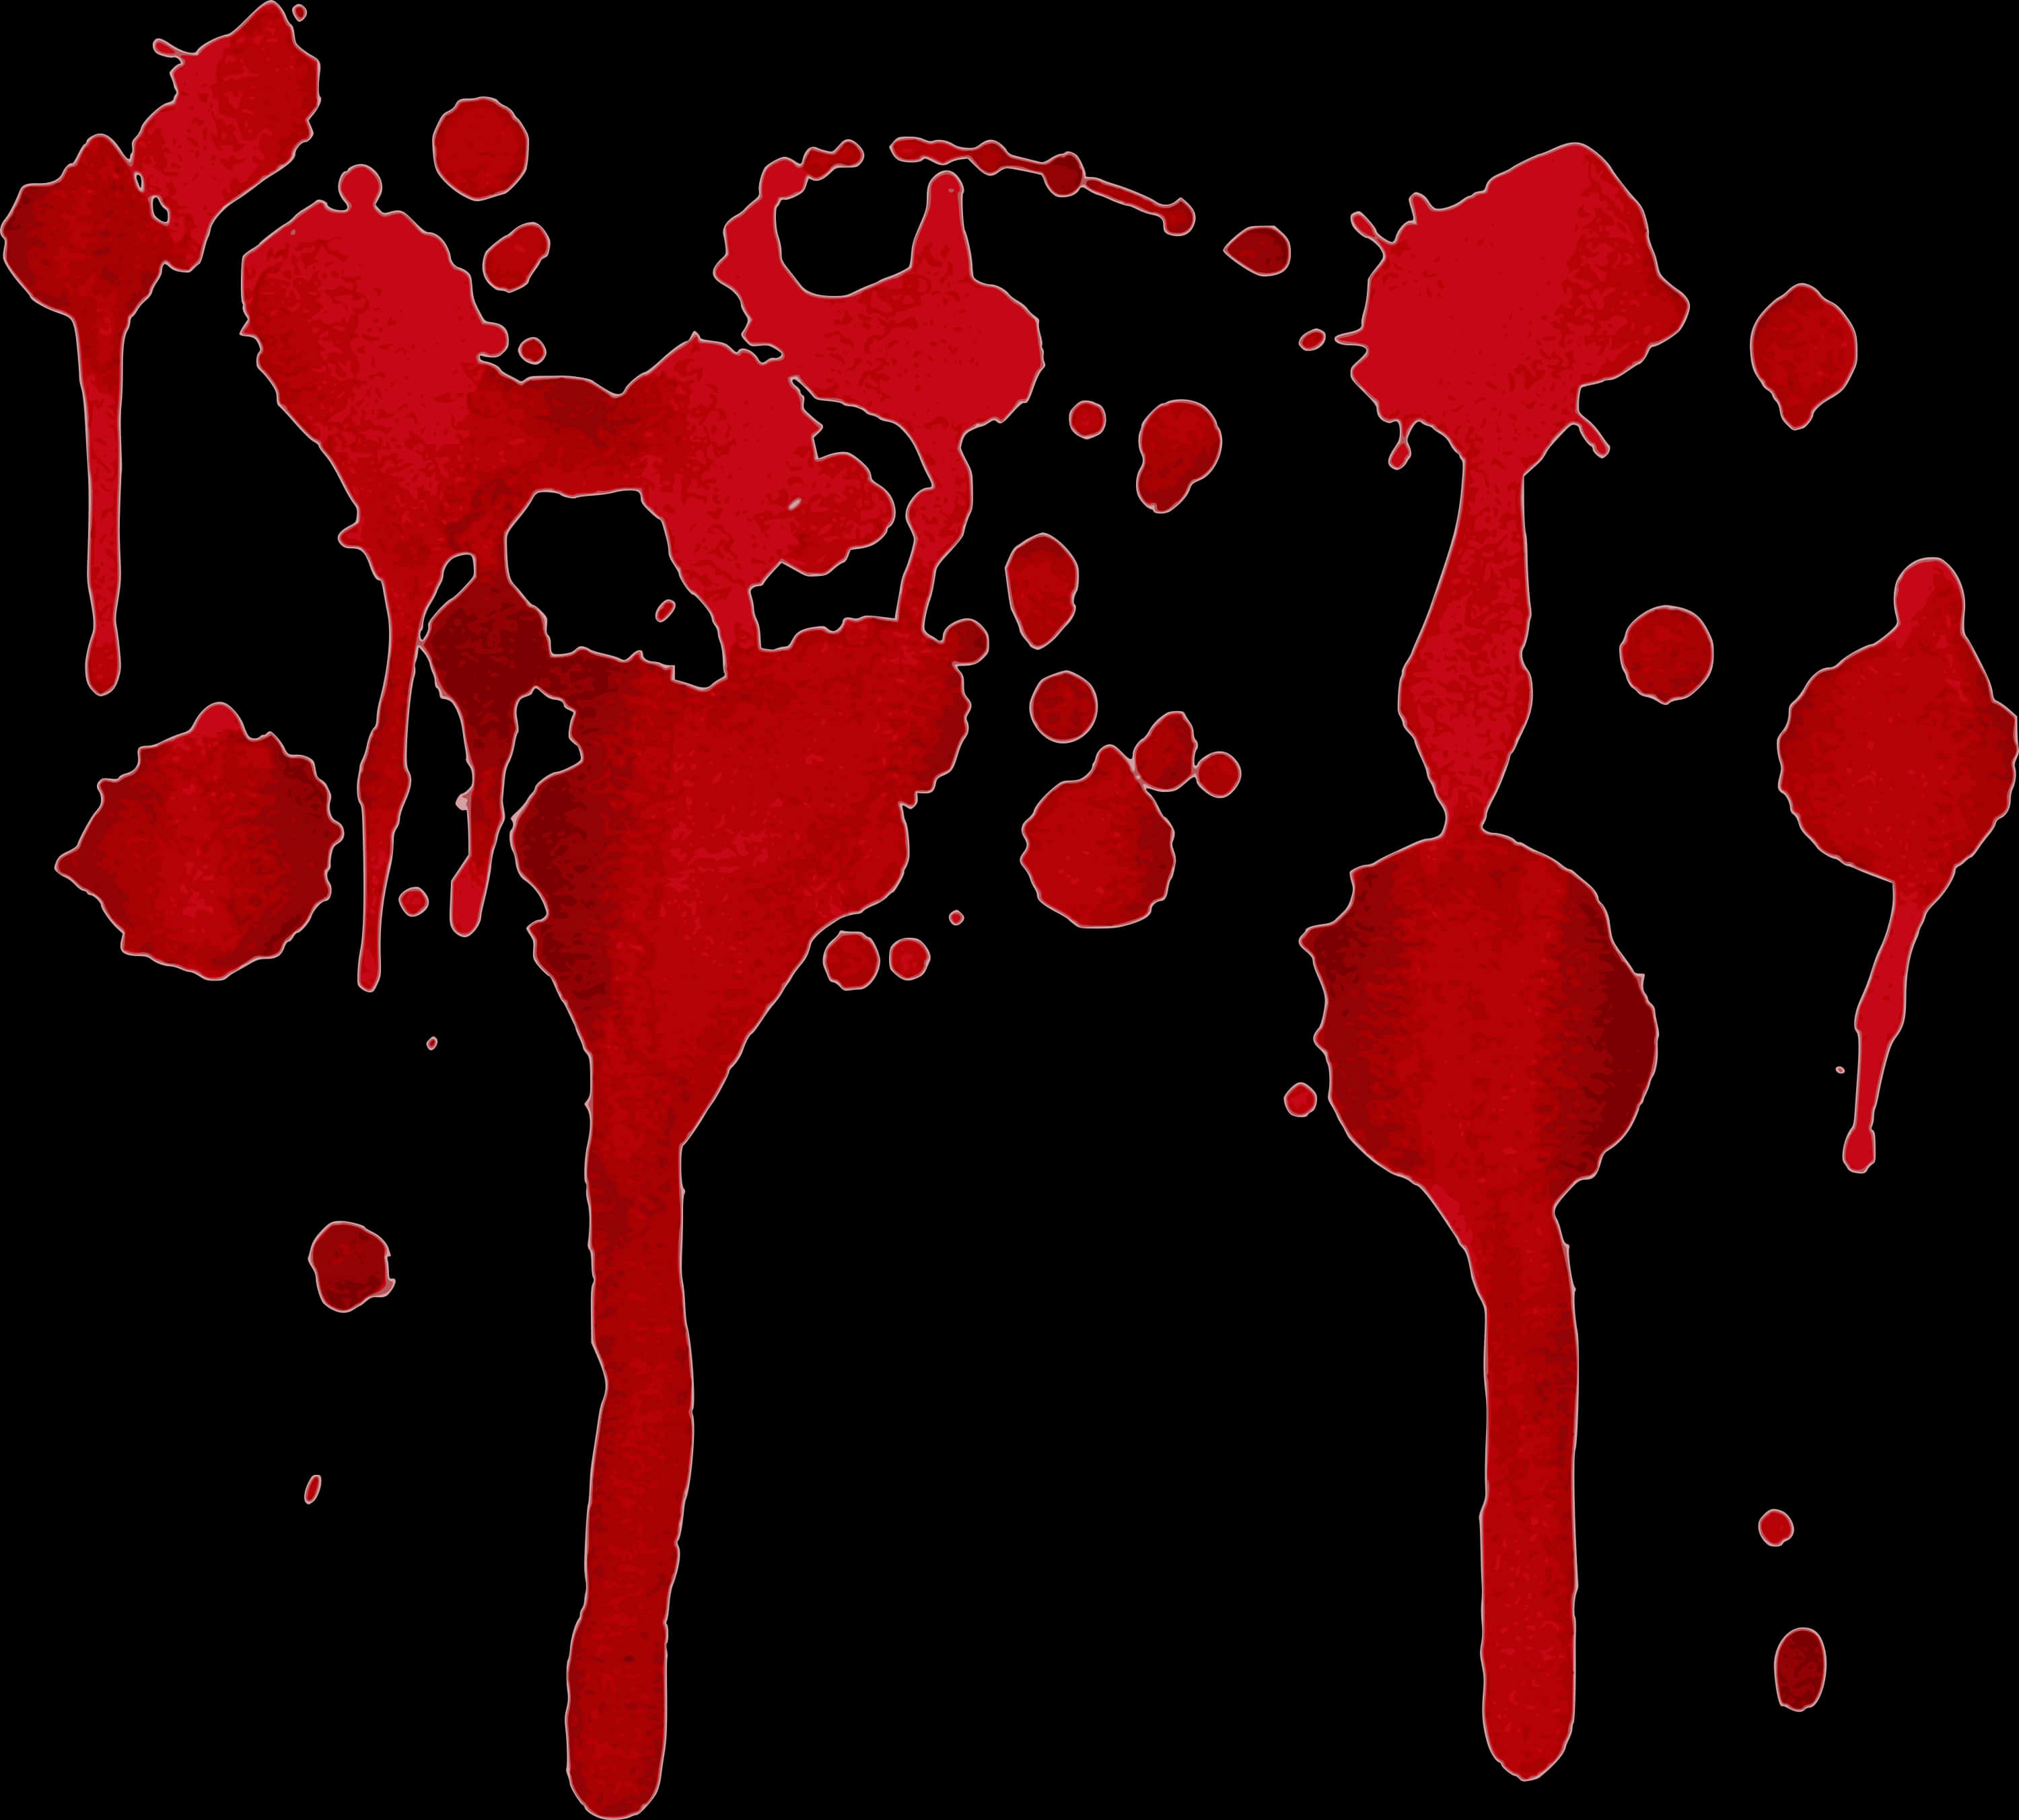 Red Blood Splatter Texture PNG image